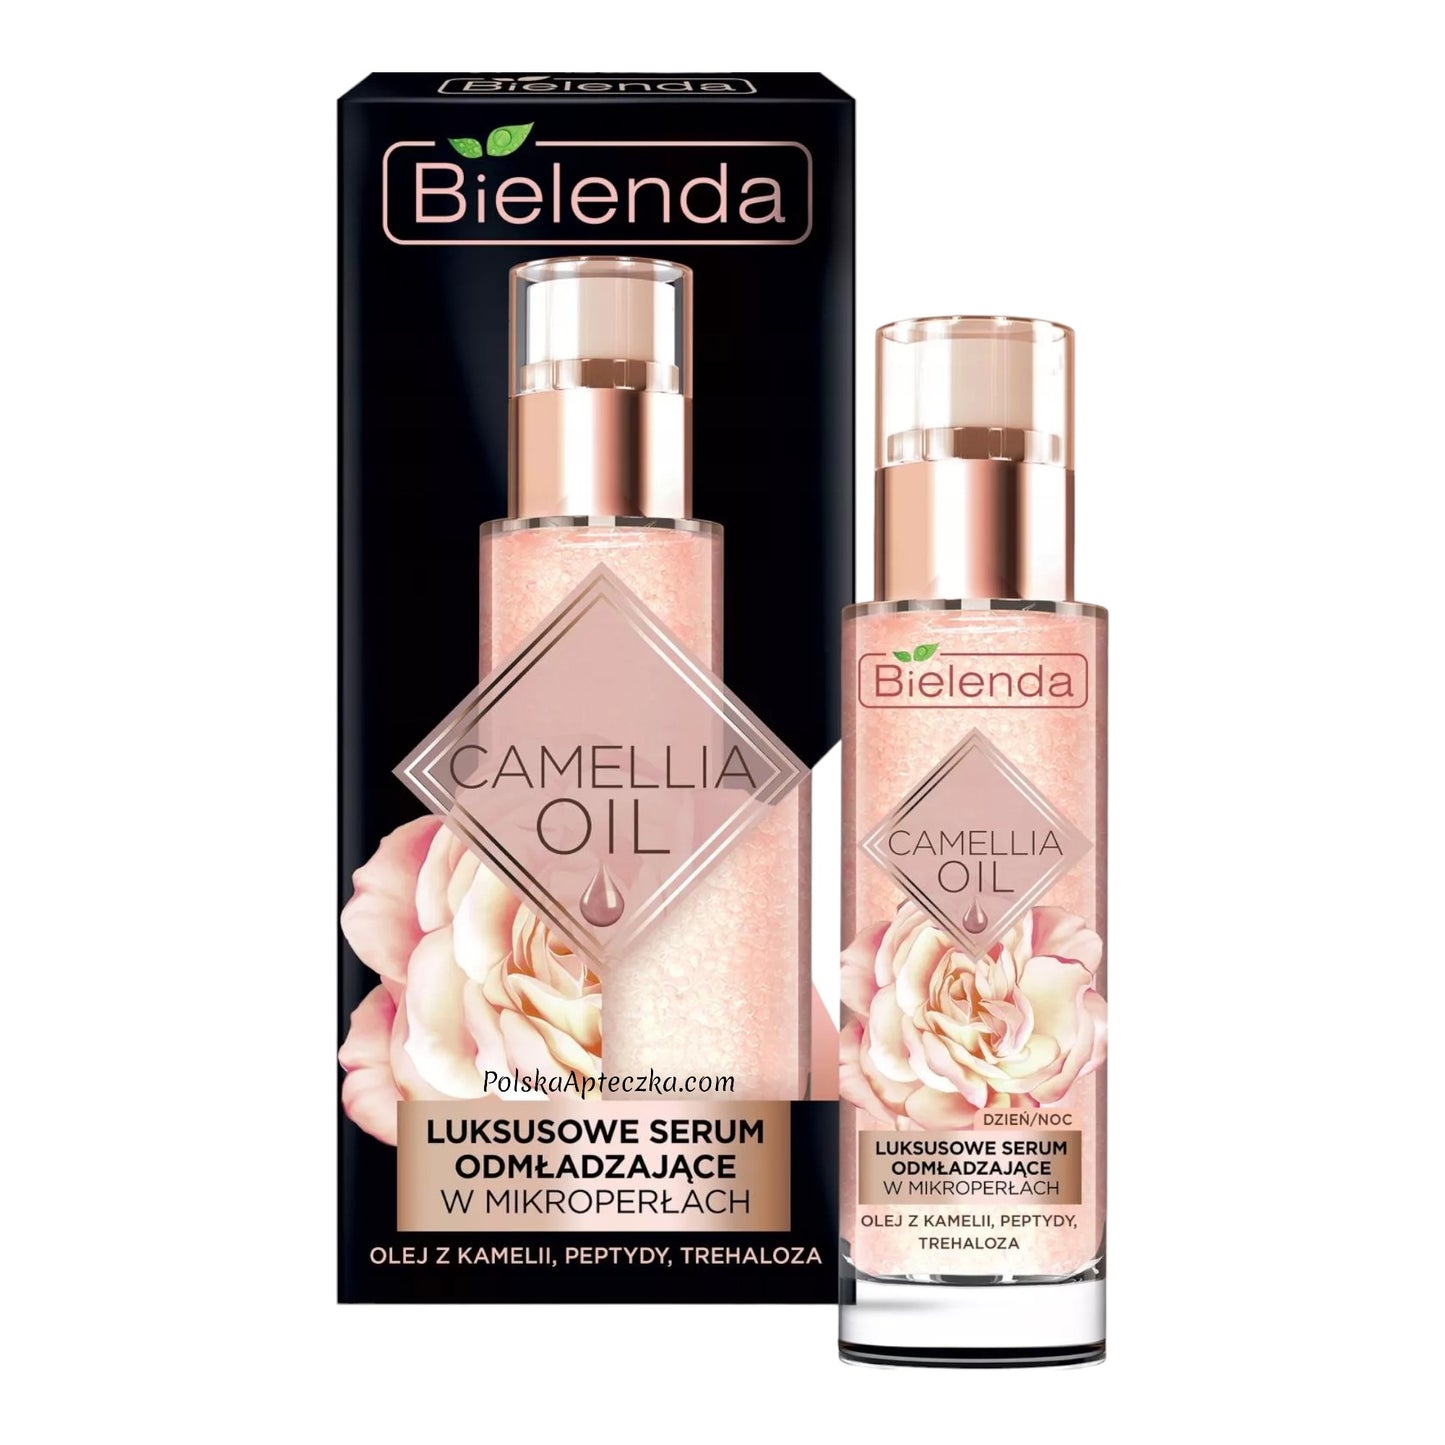 Bielenda, Camellia Oil Luksusowe serum odmładzające 30ml